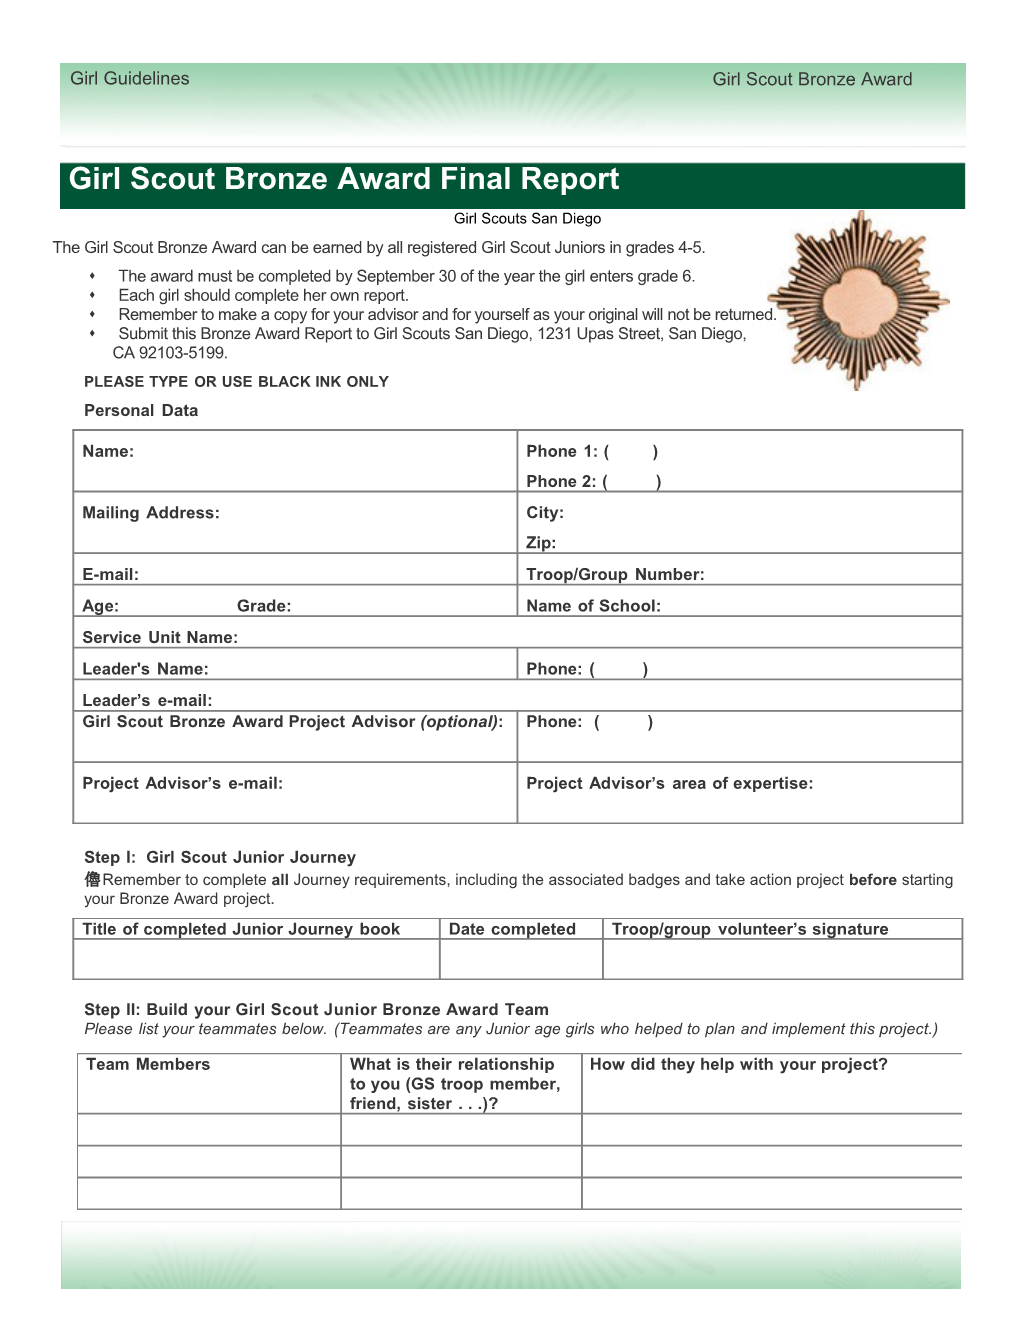 Girl Scout Bronzeaward Final Report